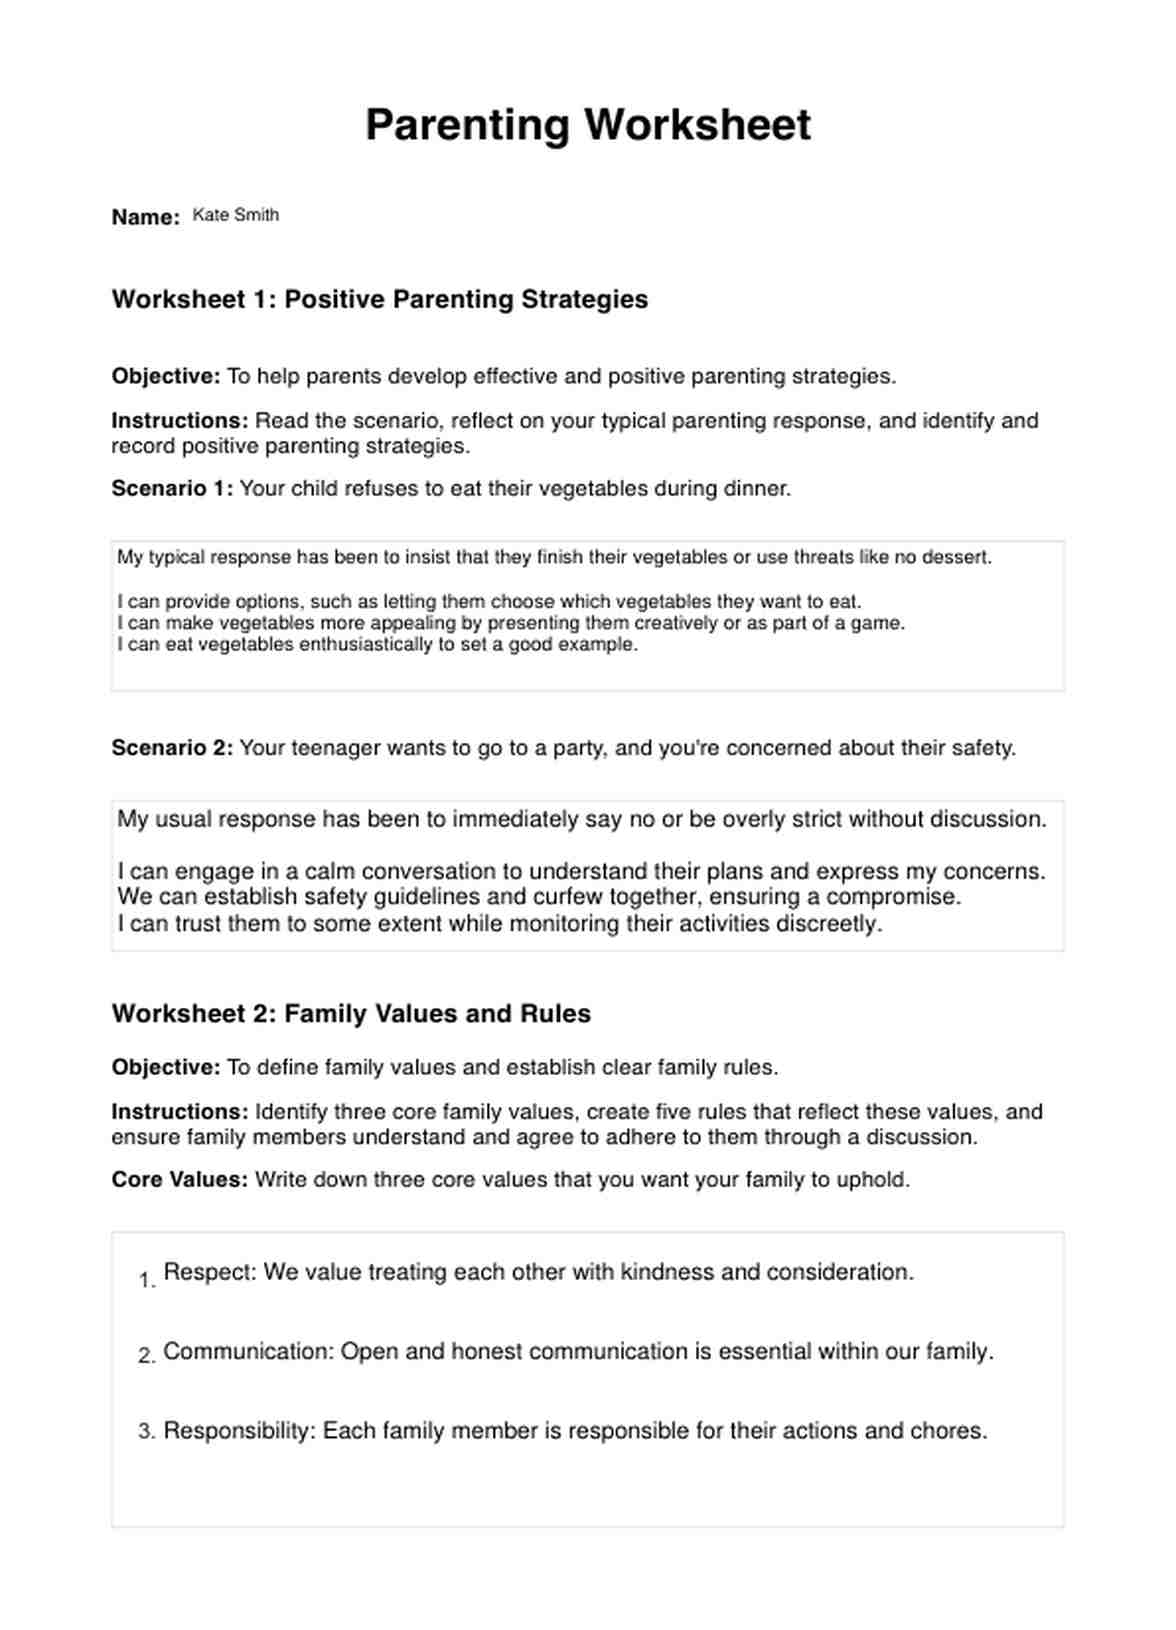 Parenting Worksheets PDF Example